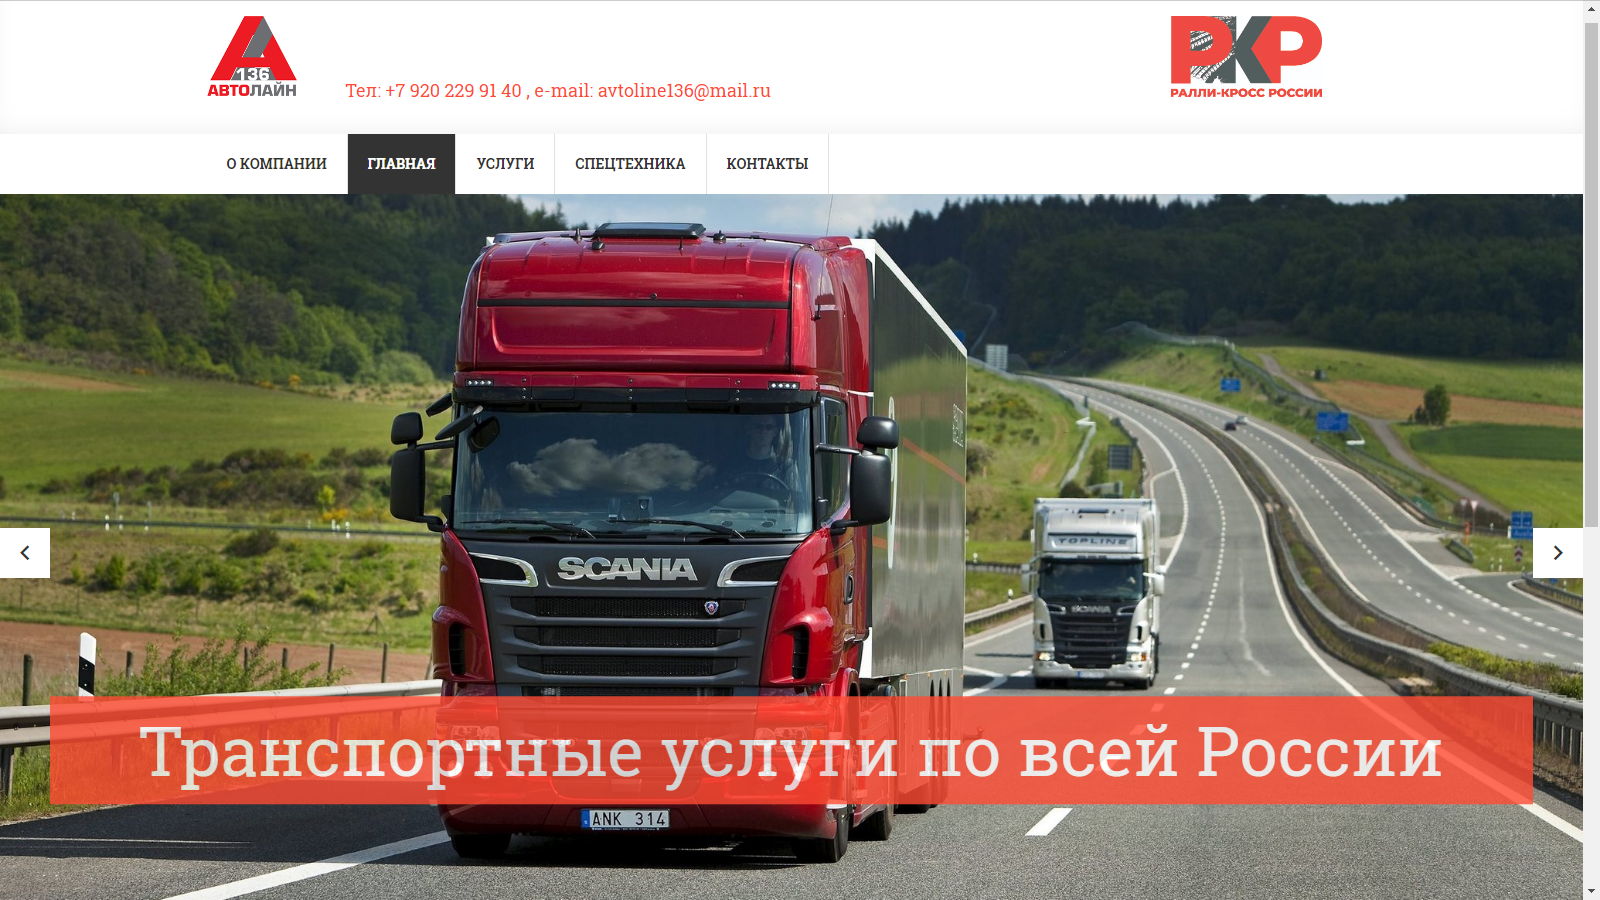 Сайт транспортной компании "Автолайн 136"